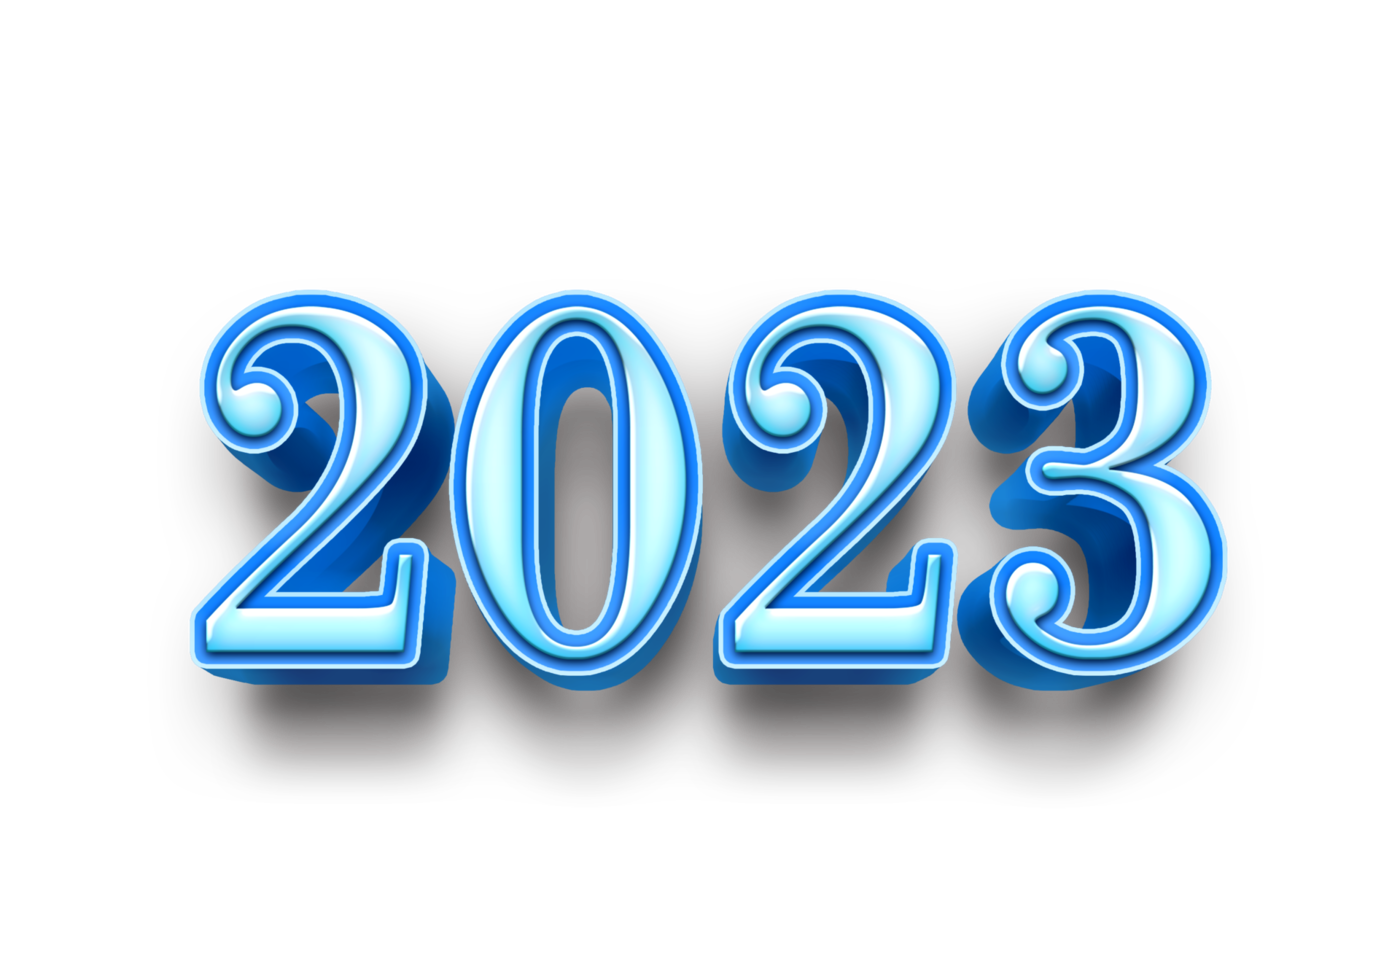 2023 Text Nummer Jahr 3d Attrappe, Lehrmodell, Simulation Eis Blau png